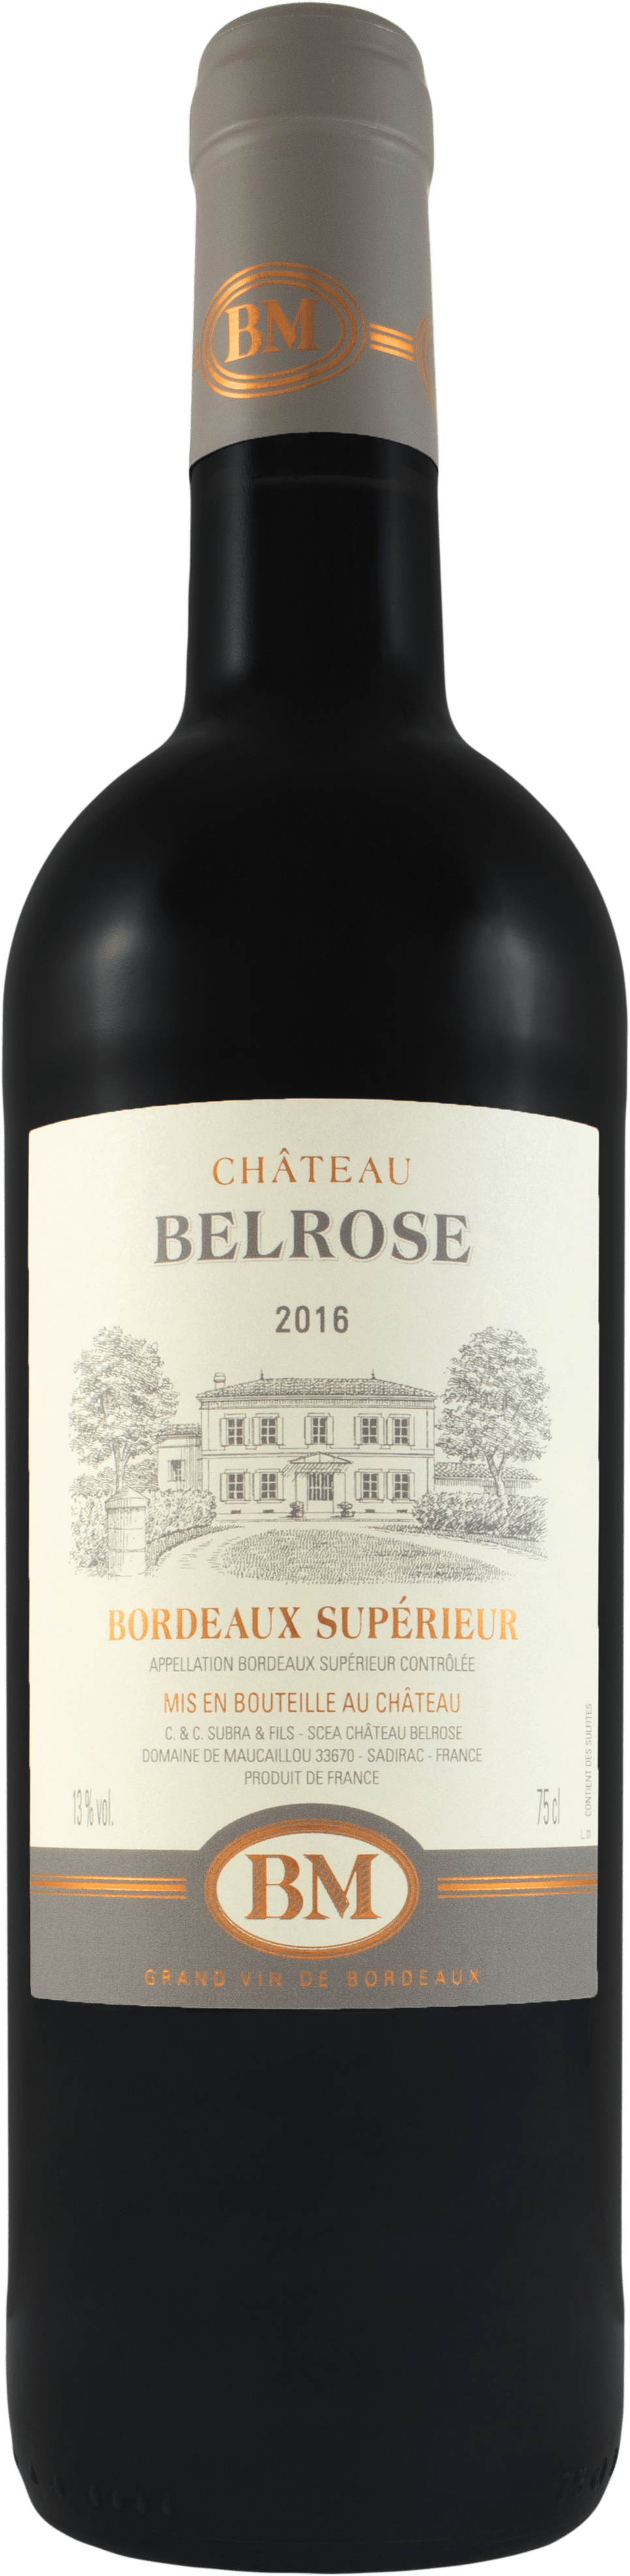 2016 Chateau Belrose